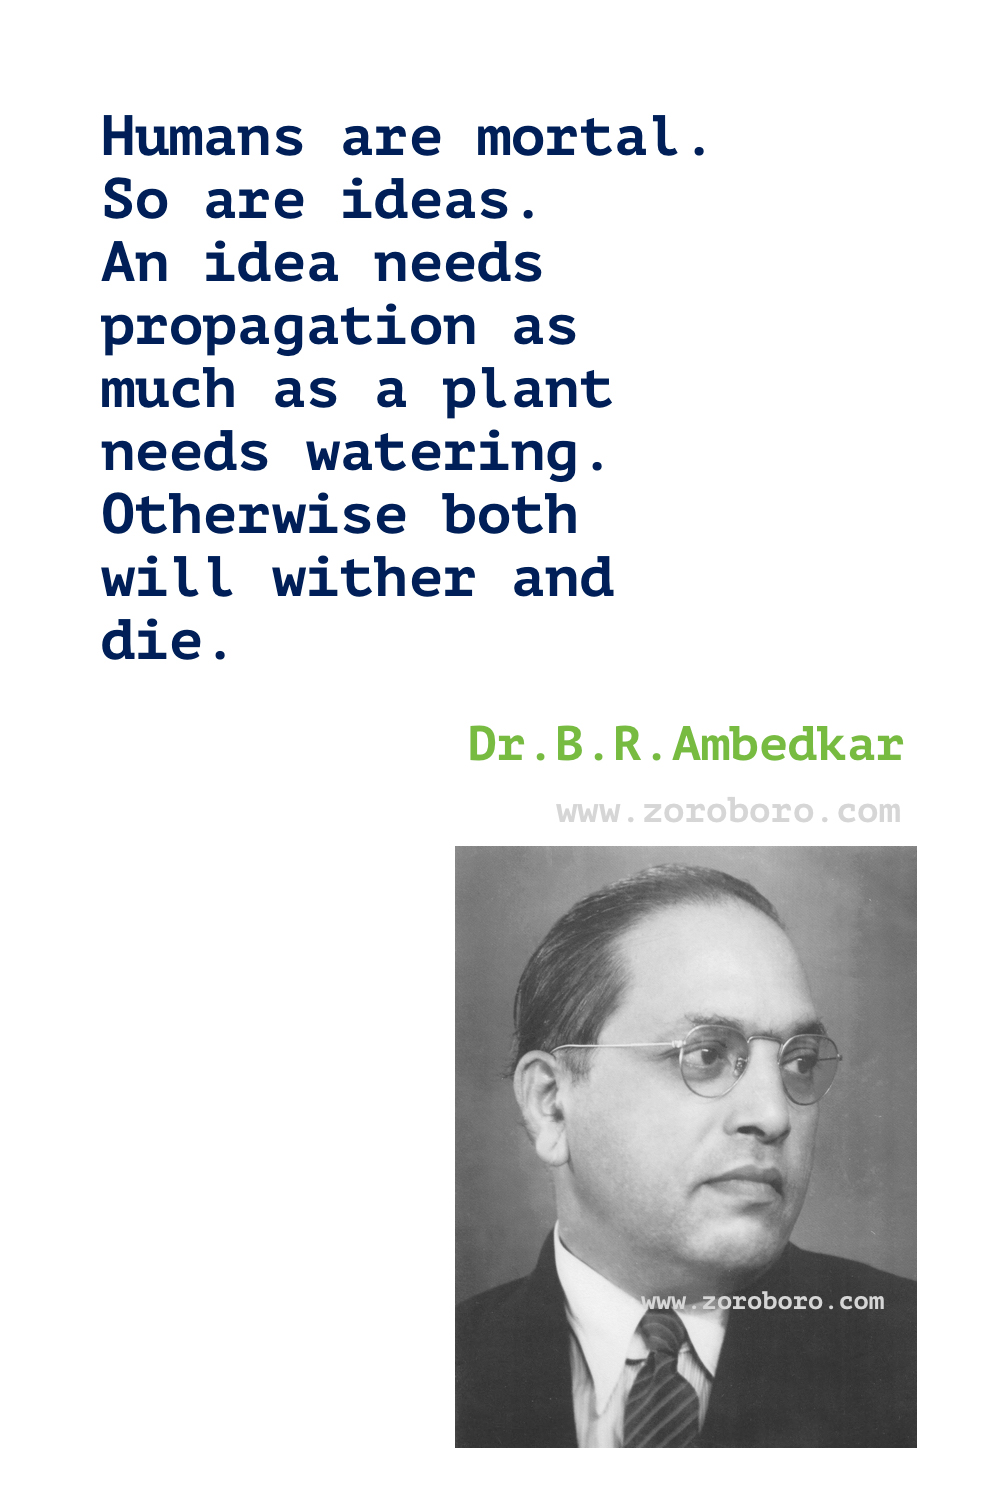 B. R. Ambedkar Quotes,B. R. Ambedkar Constitution Quotes, B. R. Ambedkar Democracy Quotes, B. R. Ambedkar Religion Quotes. B. R. Ambedkar Books Quotes,B. R. Ambedkar Inspirational Quotes.